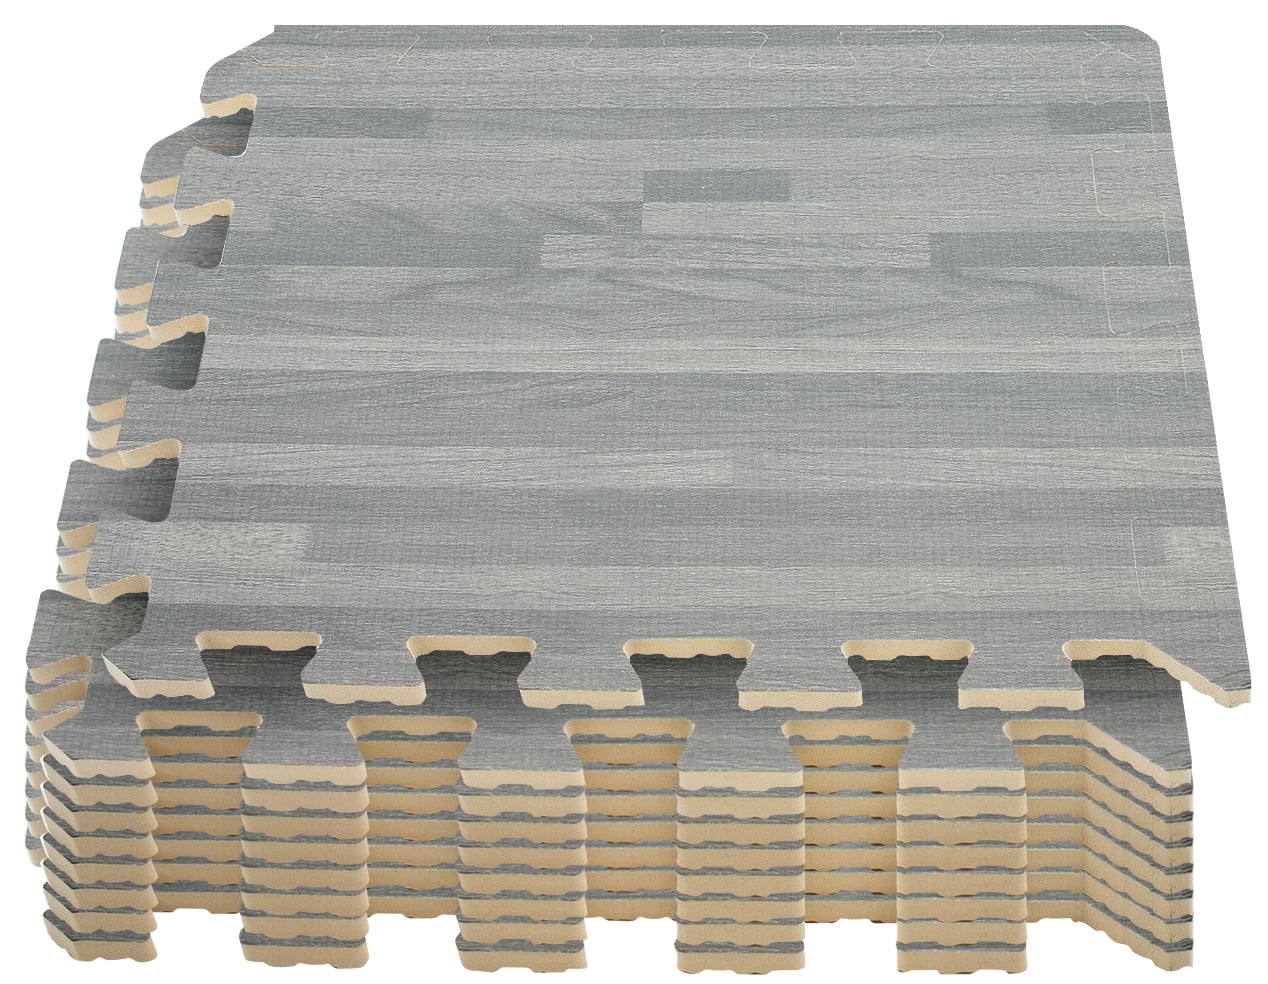 Interlocking Foam Floor Mats Wood Grain Tiles Protective Flooring Mat Exercise 